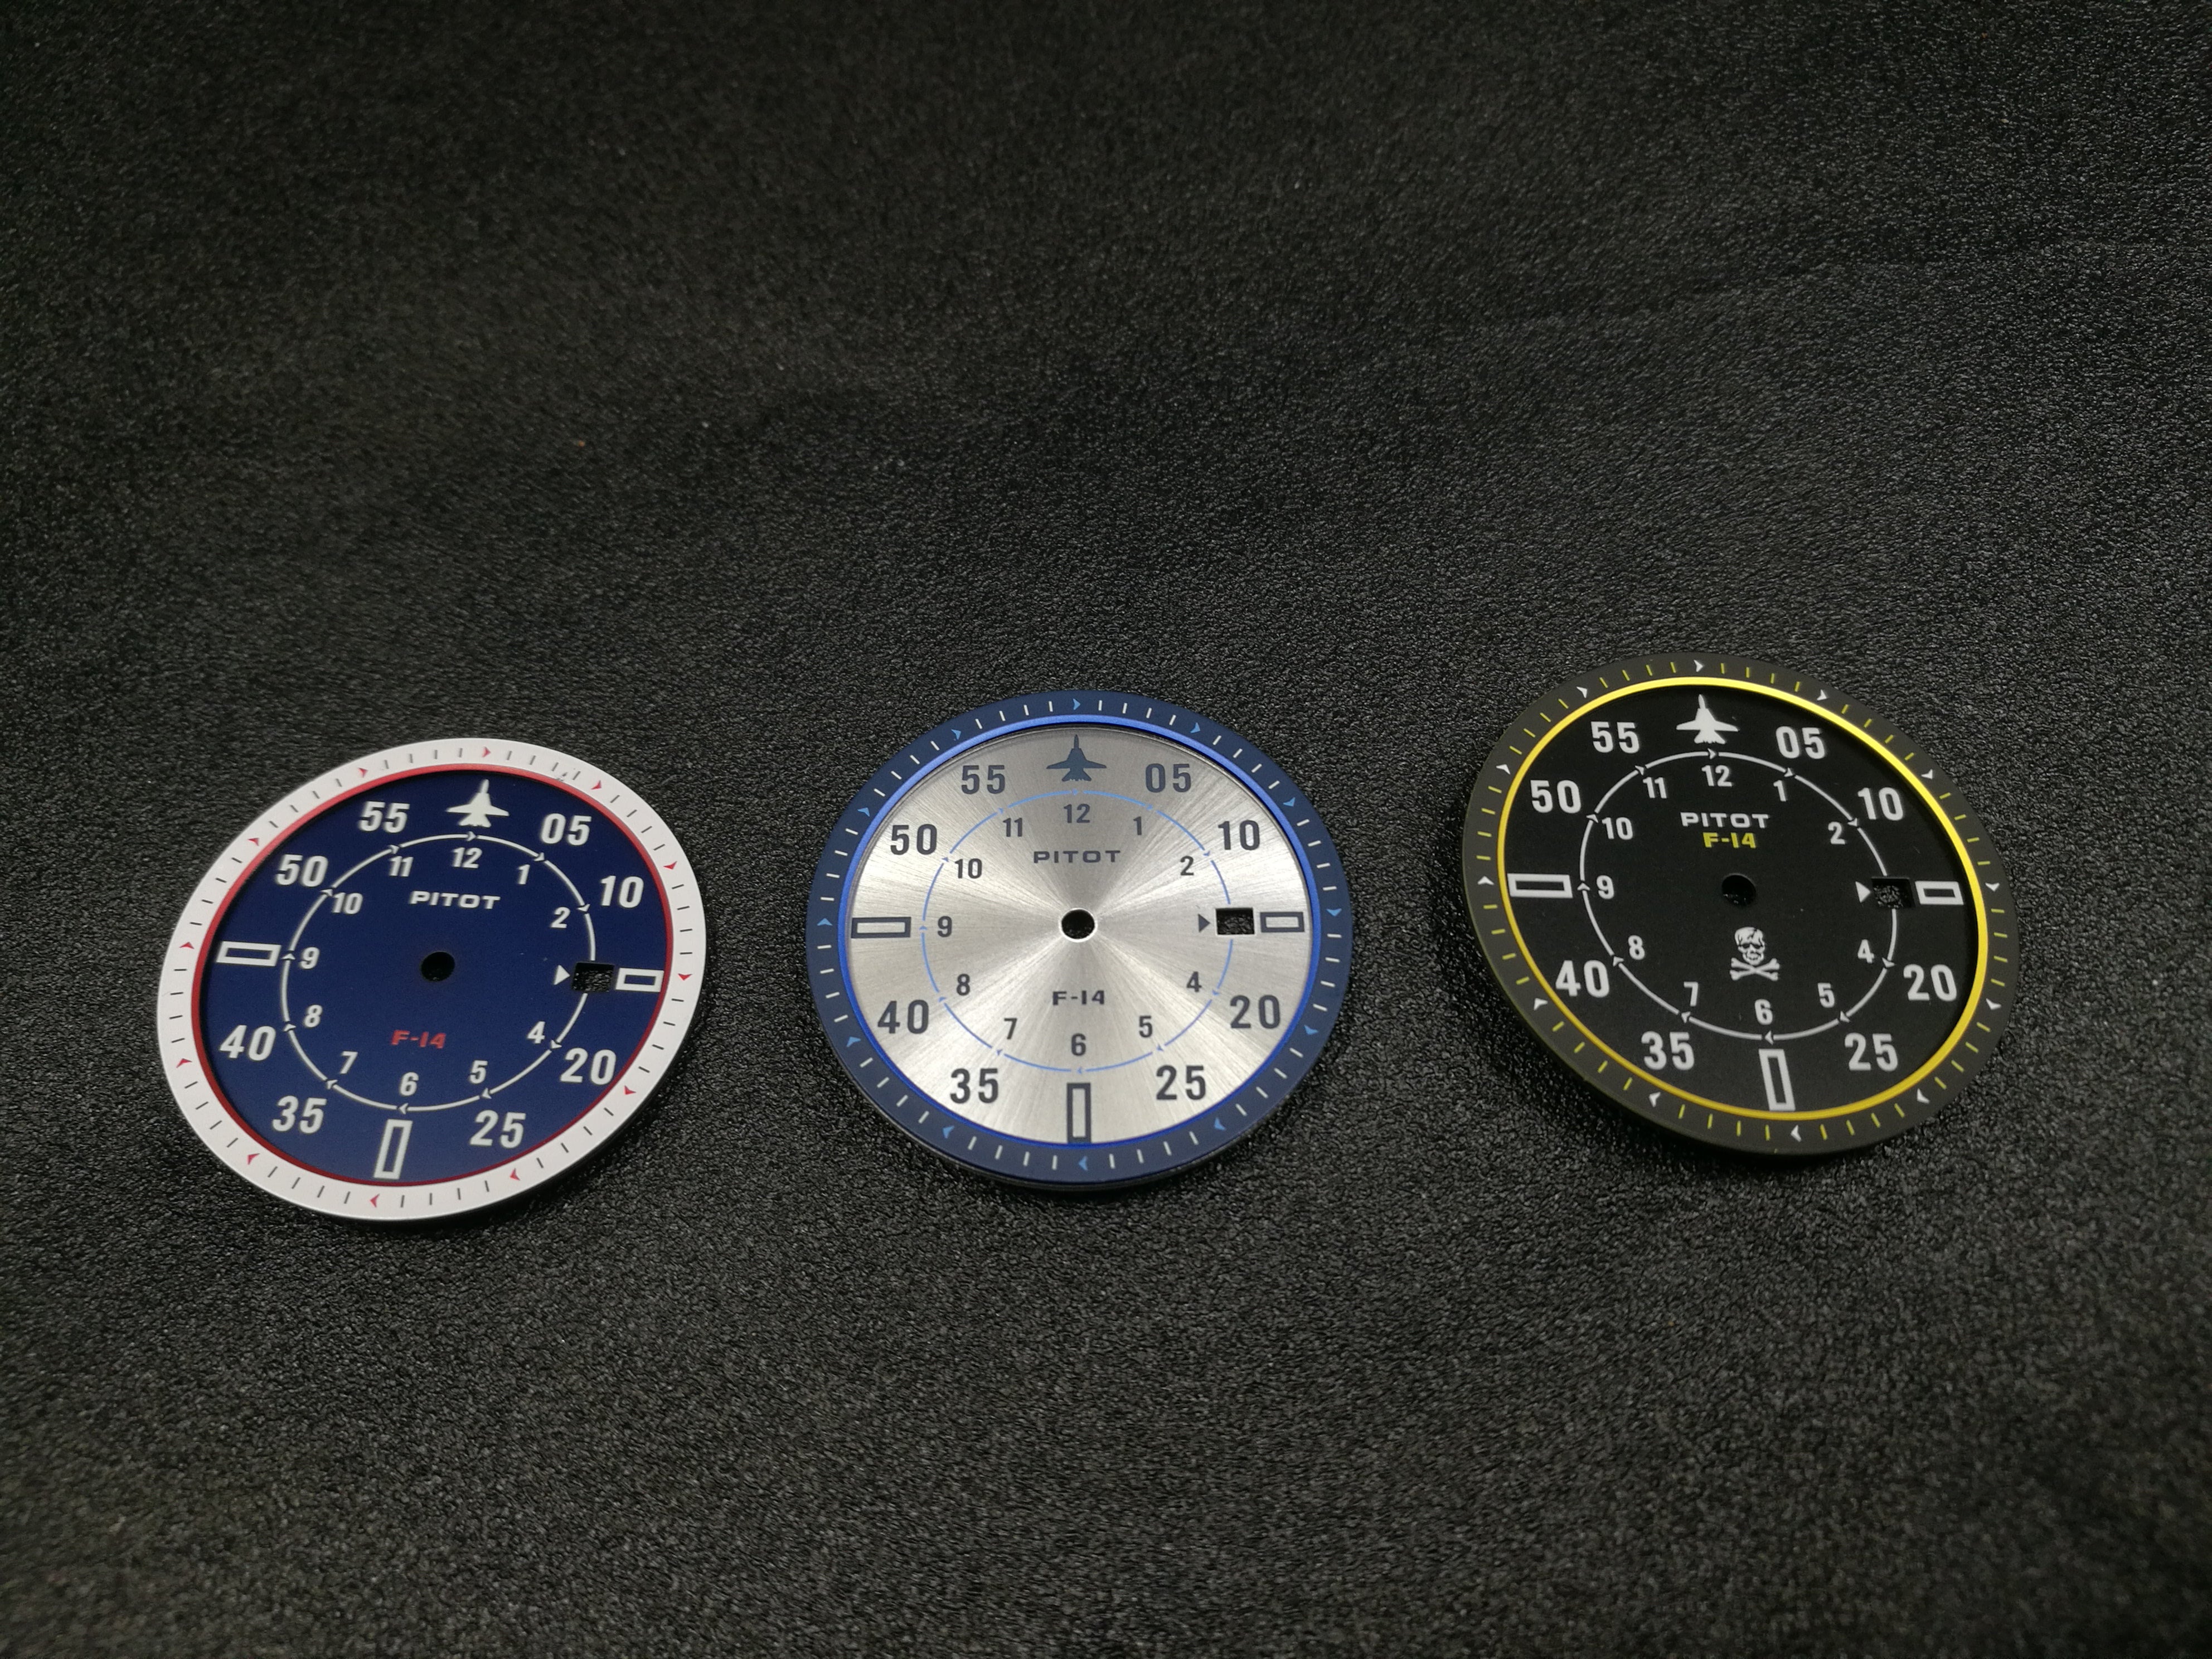 F14 watch prototypes ready